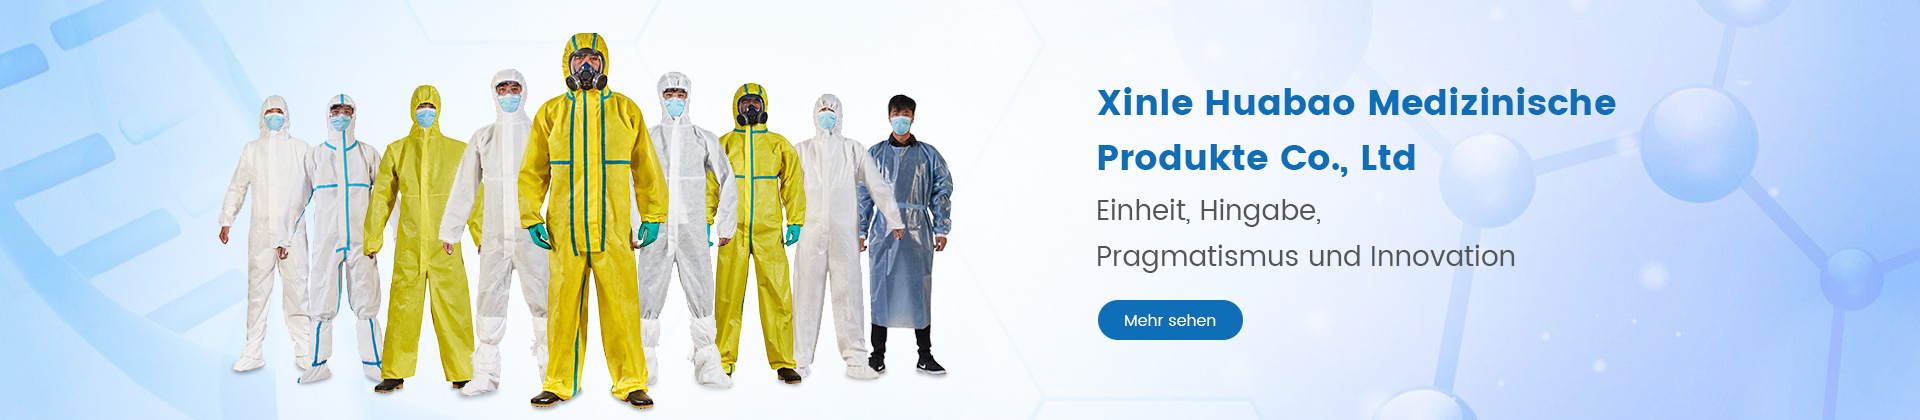 Xinle Huabao Medizinische Produkte GmbH